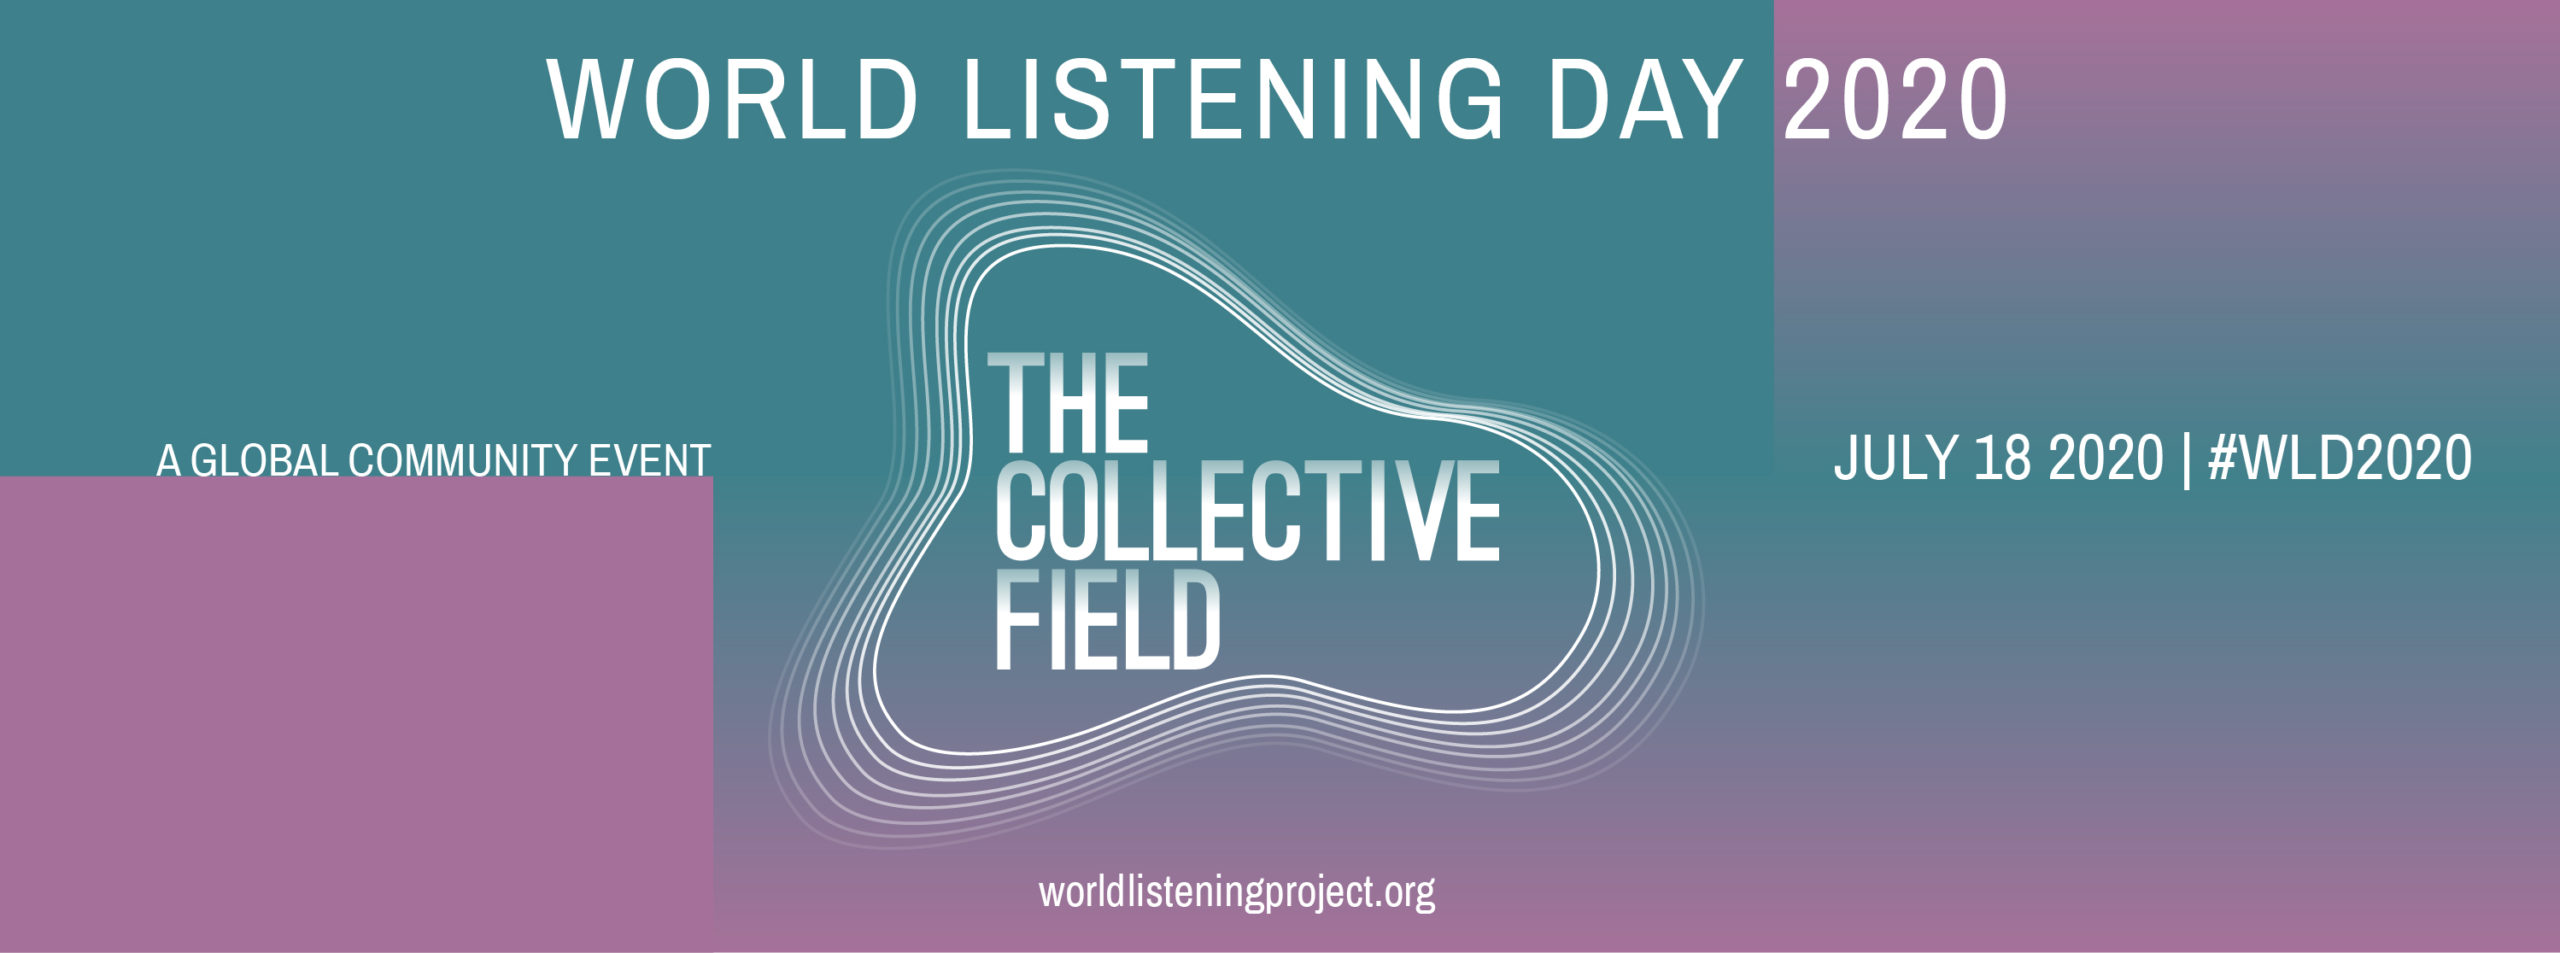 World Listening day 2020